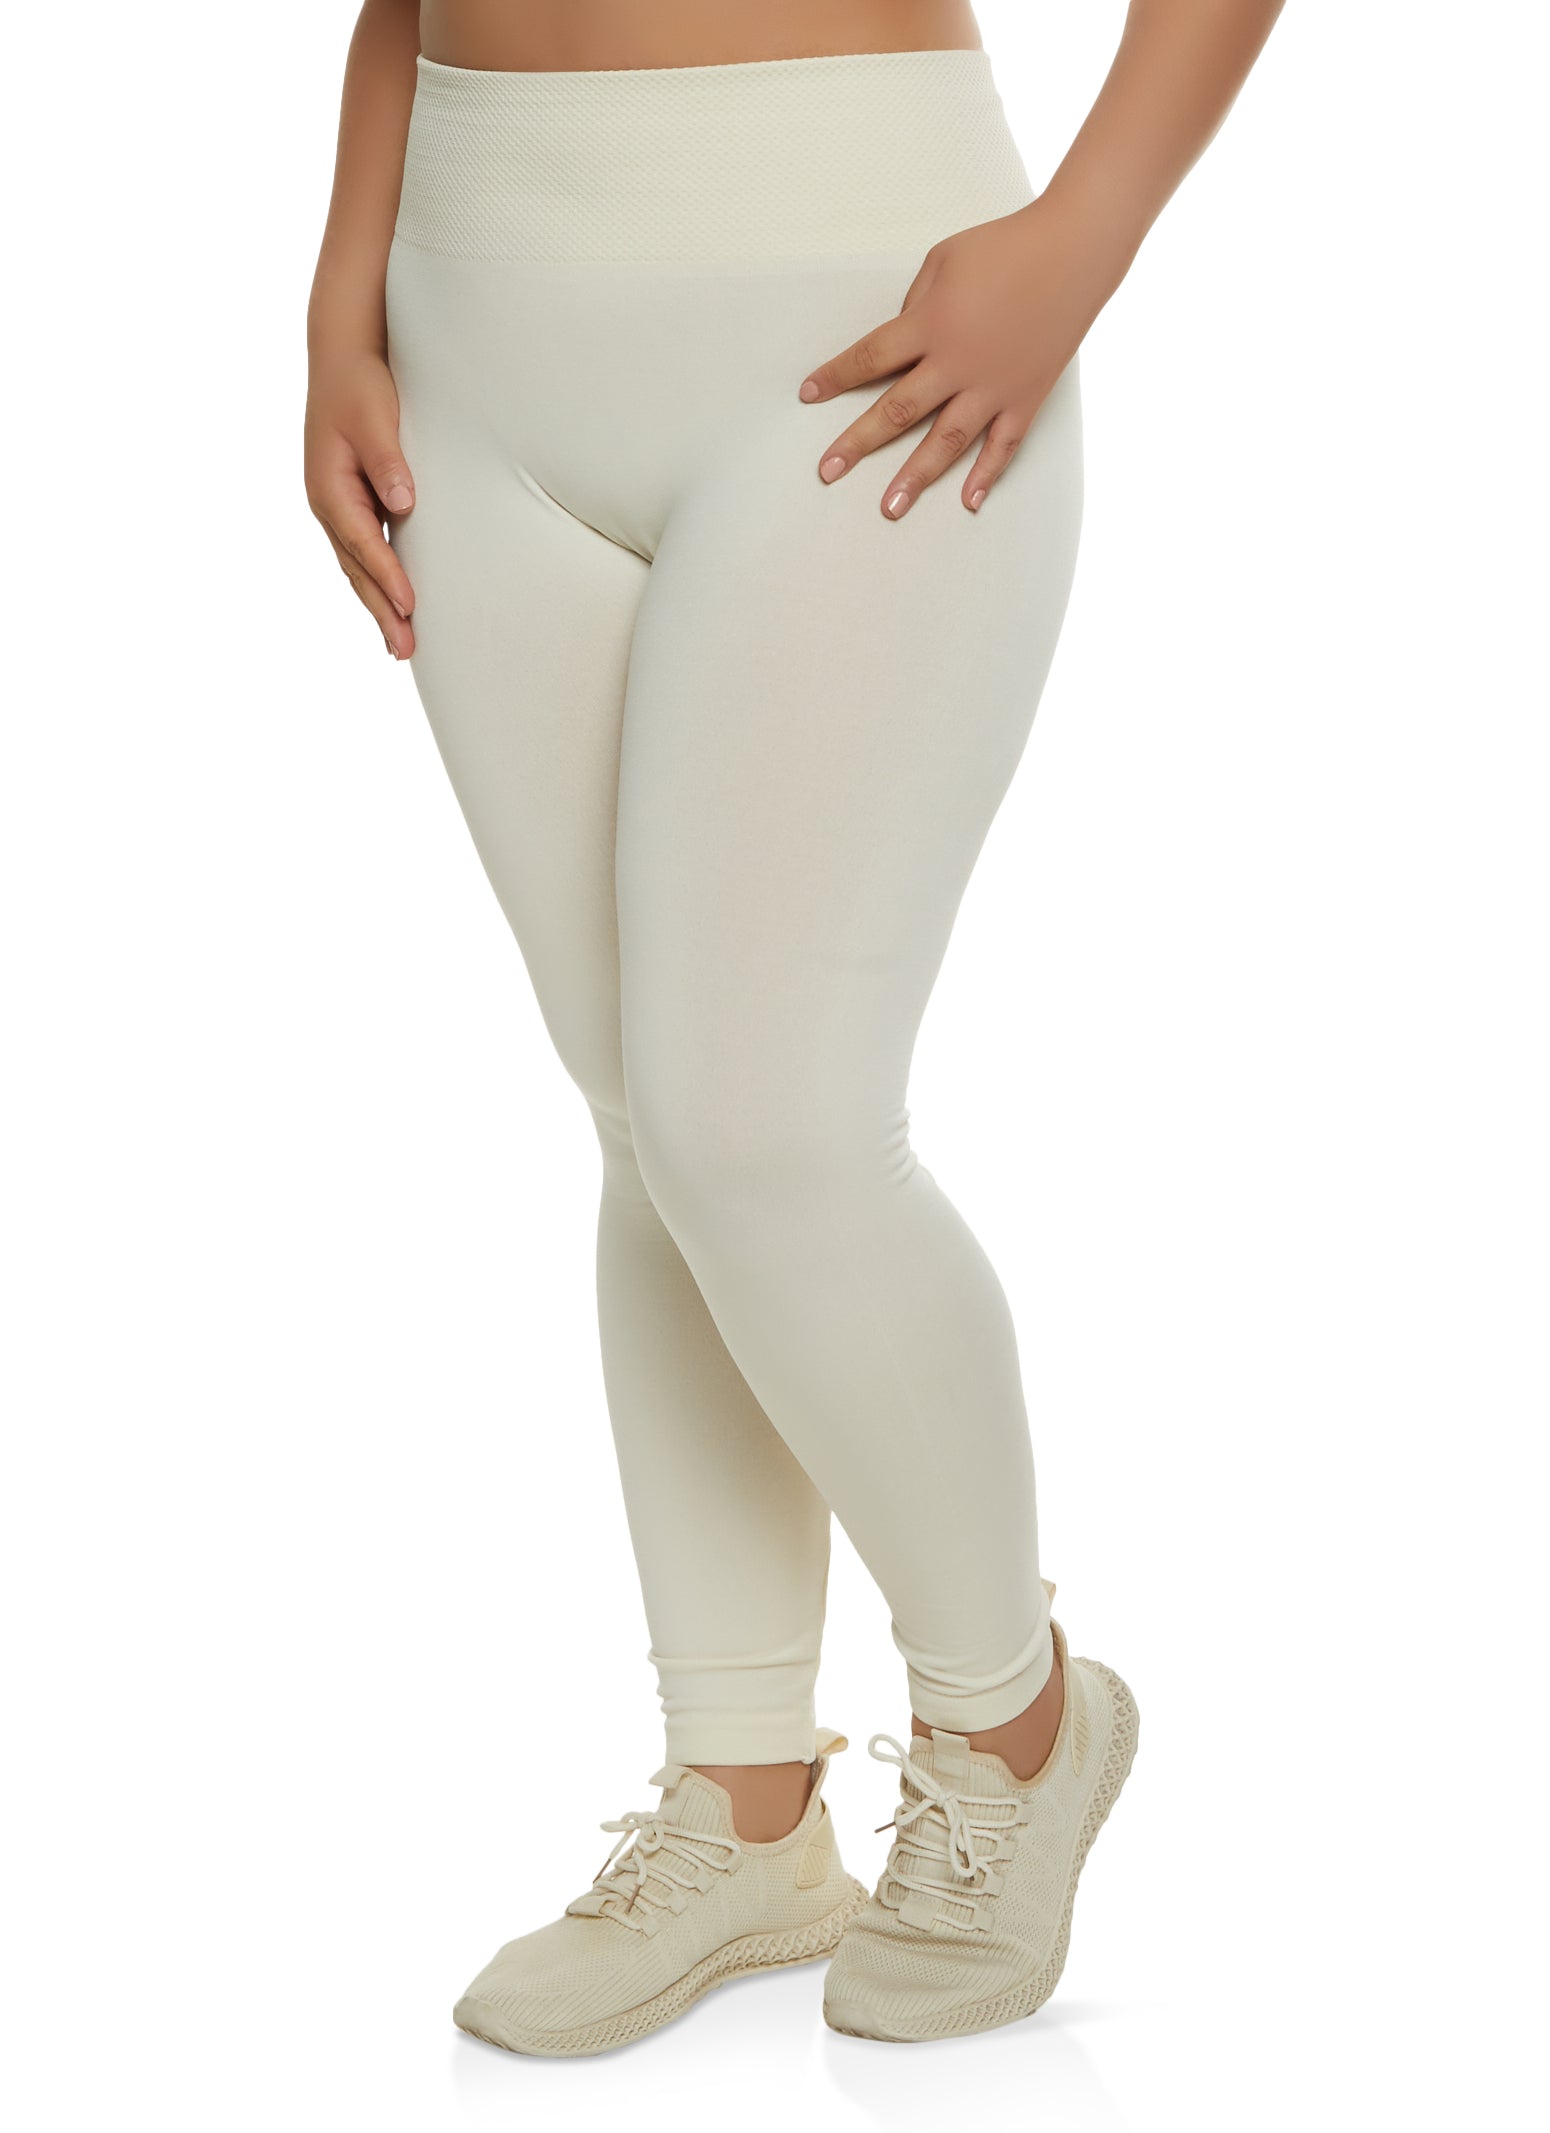 Plus Size Leggings Pants for Women 3X Solid Color Seamless Fleece